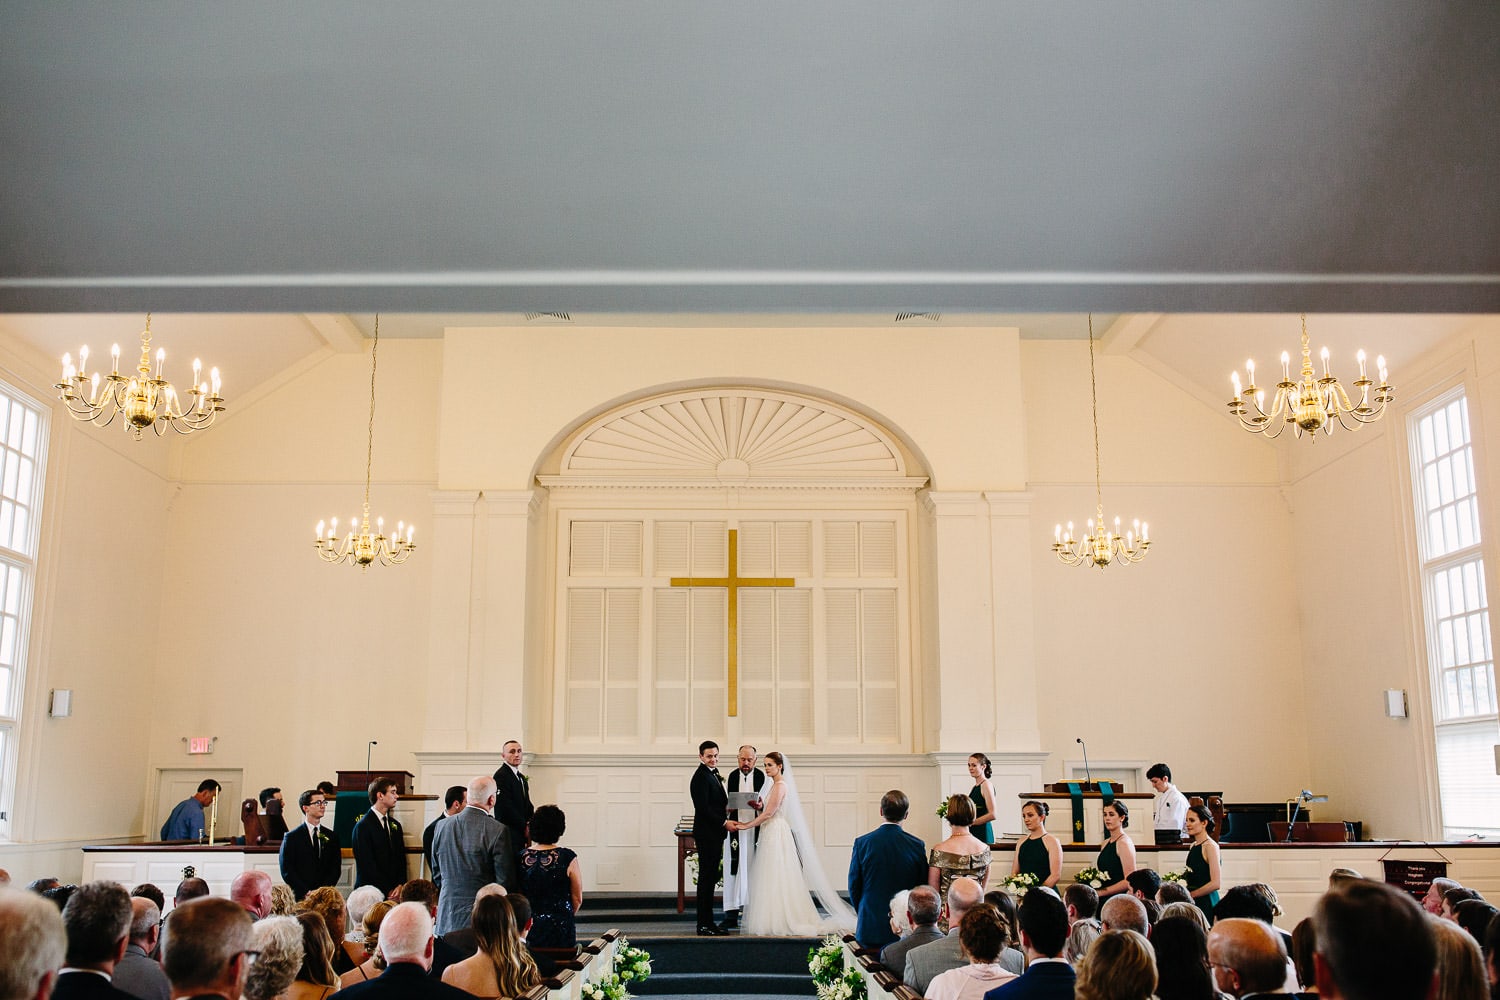 Wedding at the Hingham Congregational Church | Kelly Benvenuto Photography | Boston wedding photographer